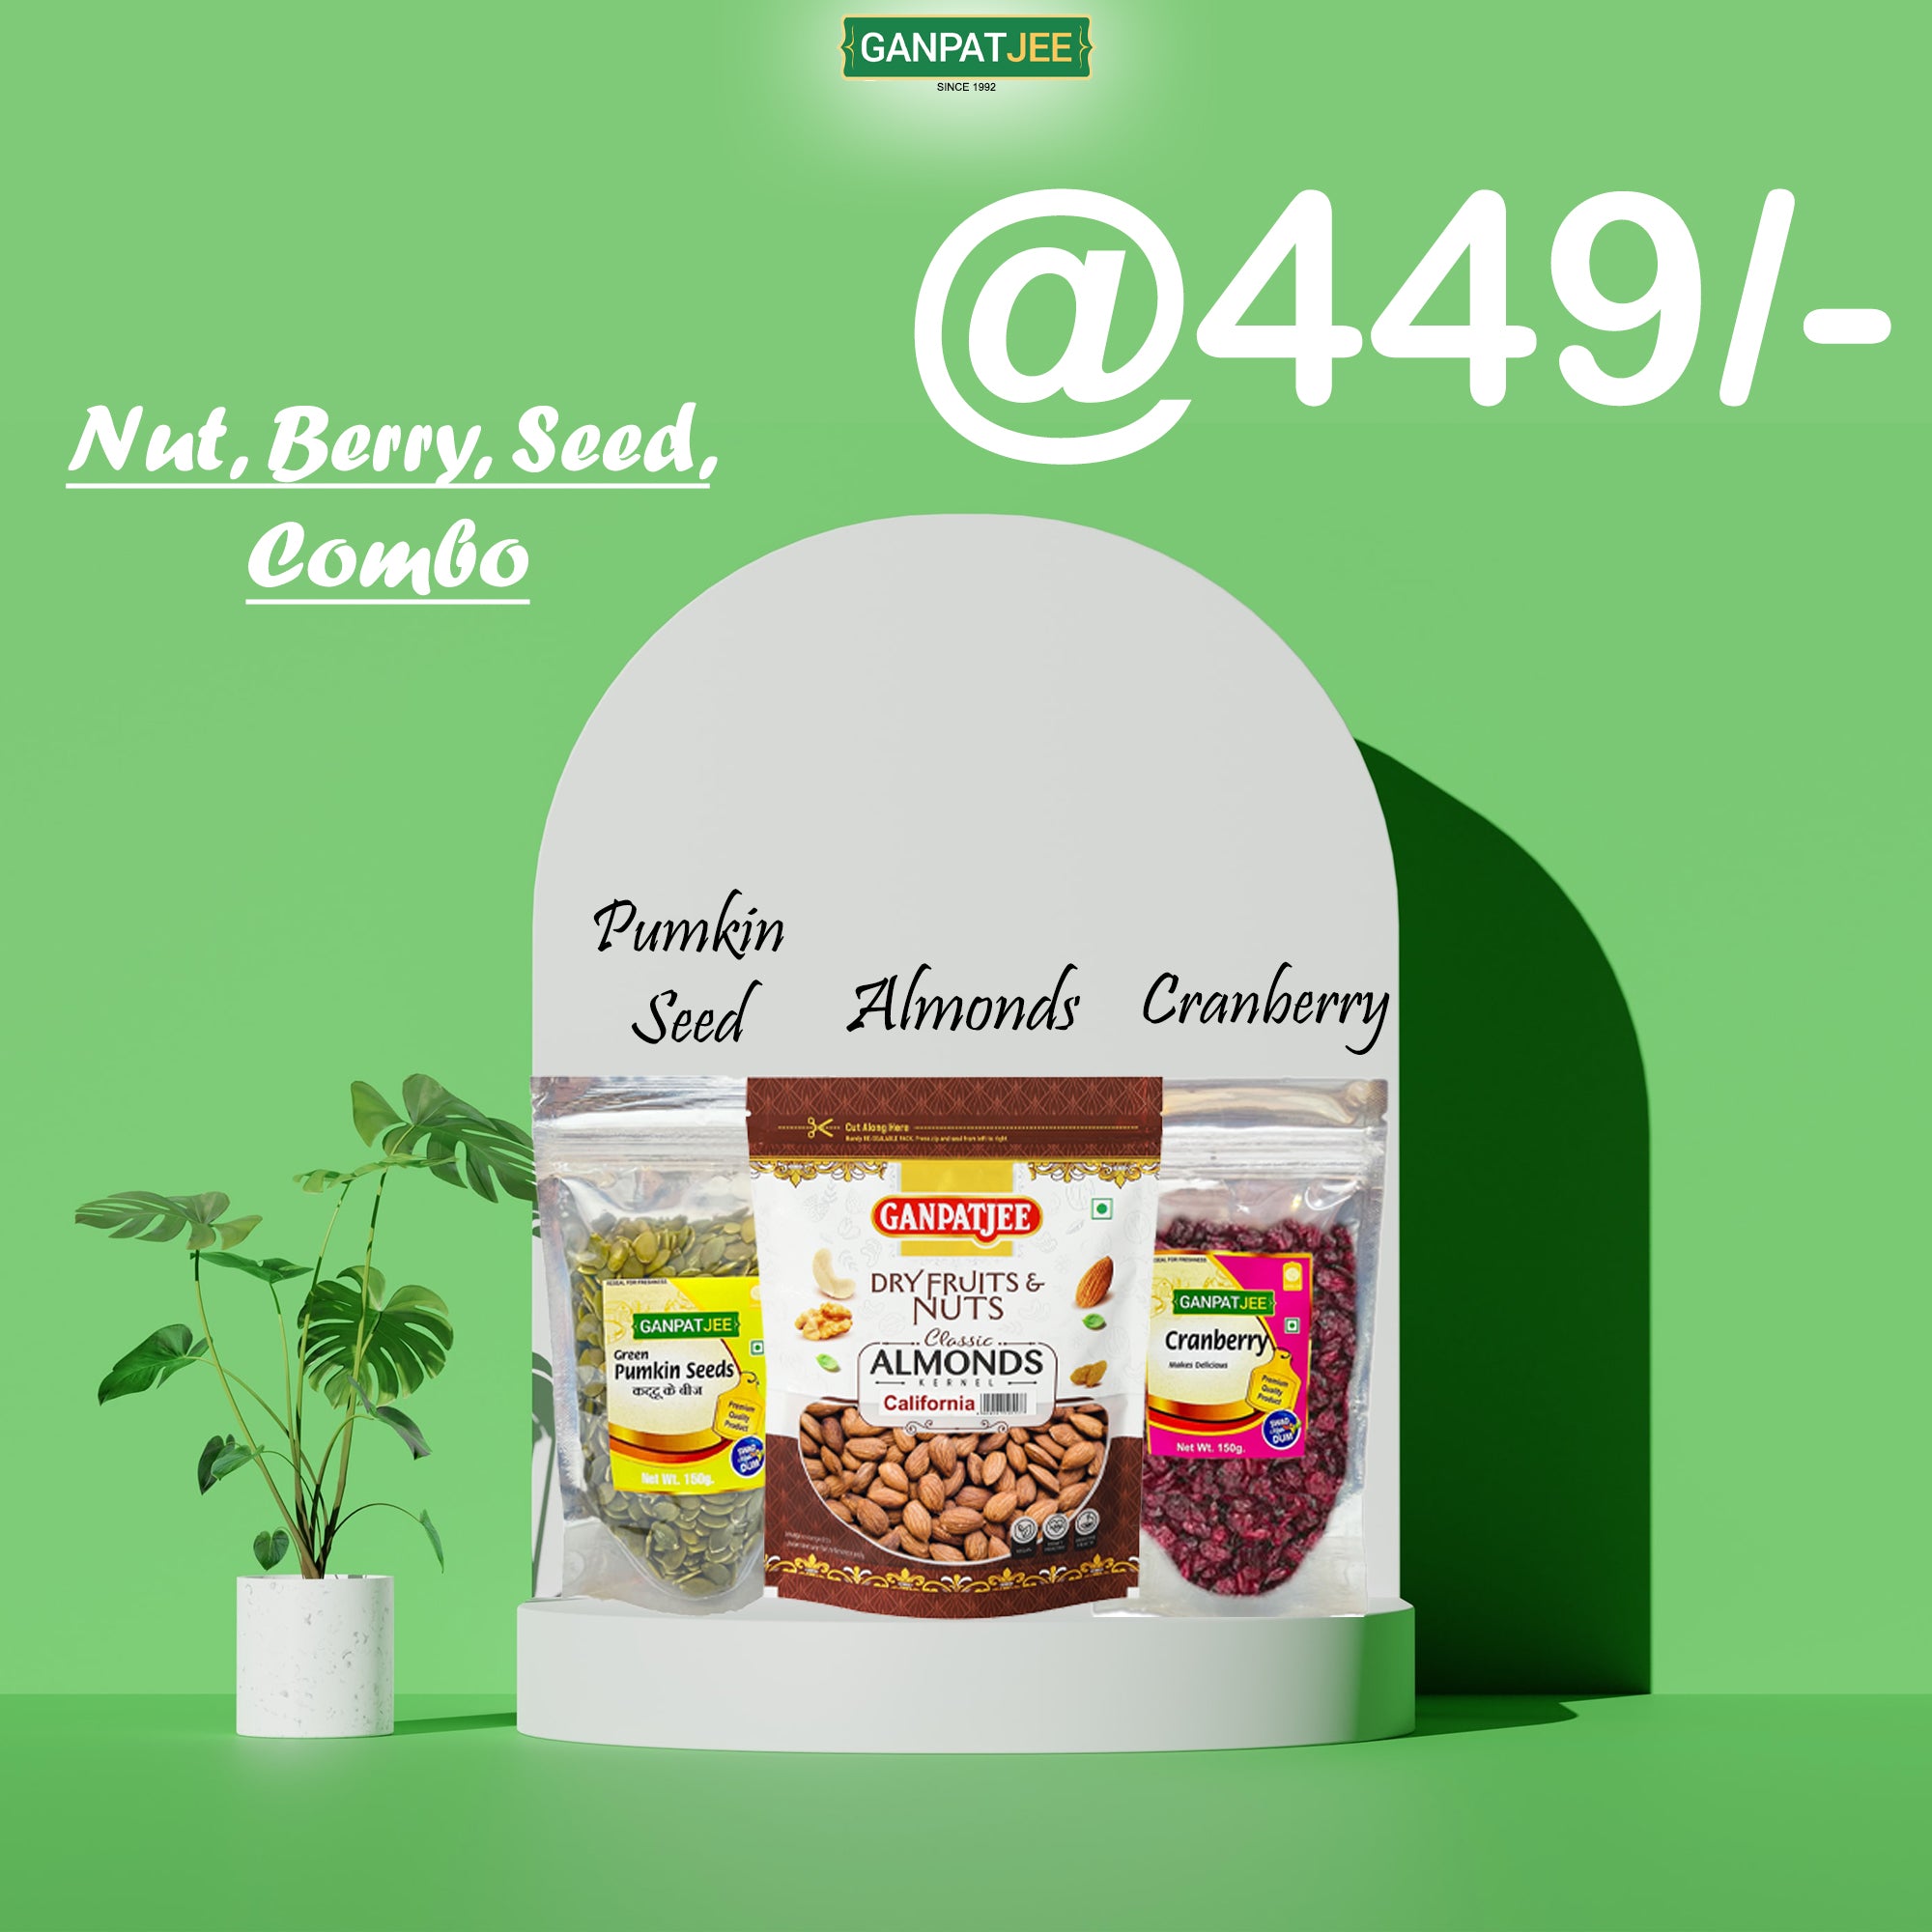 Ganpatjee Nut Berry Seed Combo, California Almonds 250g, Pumkin Seed 150g, Cranberry 150g